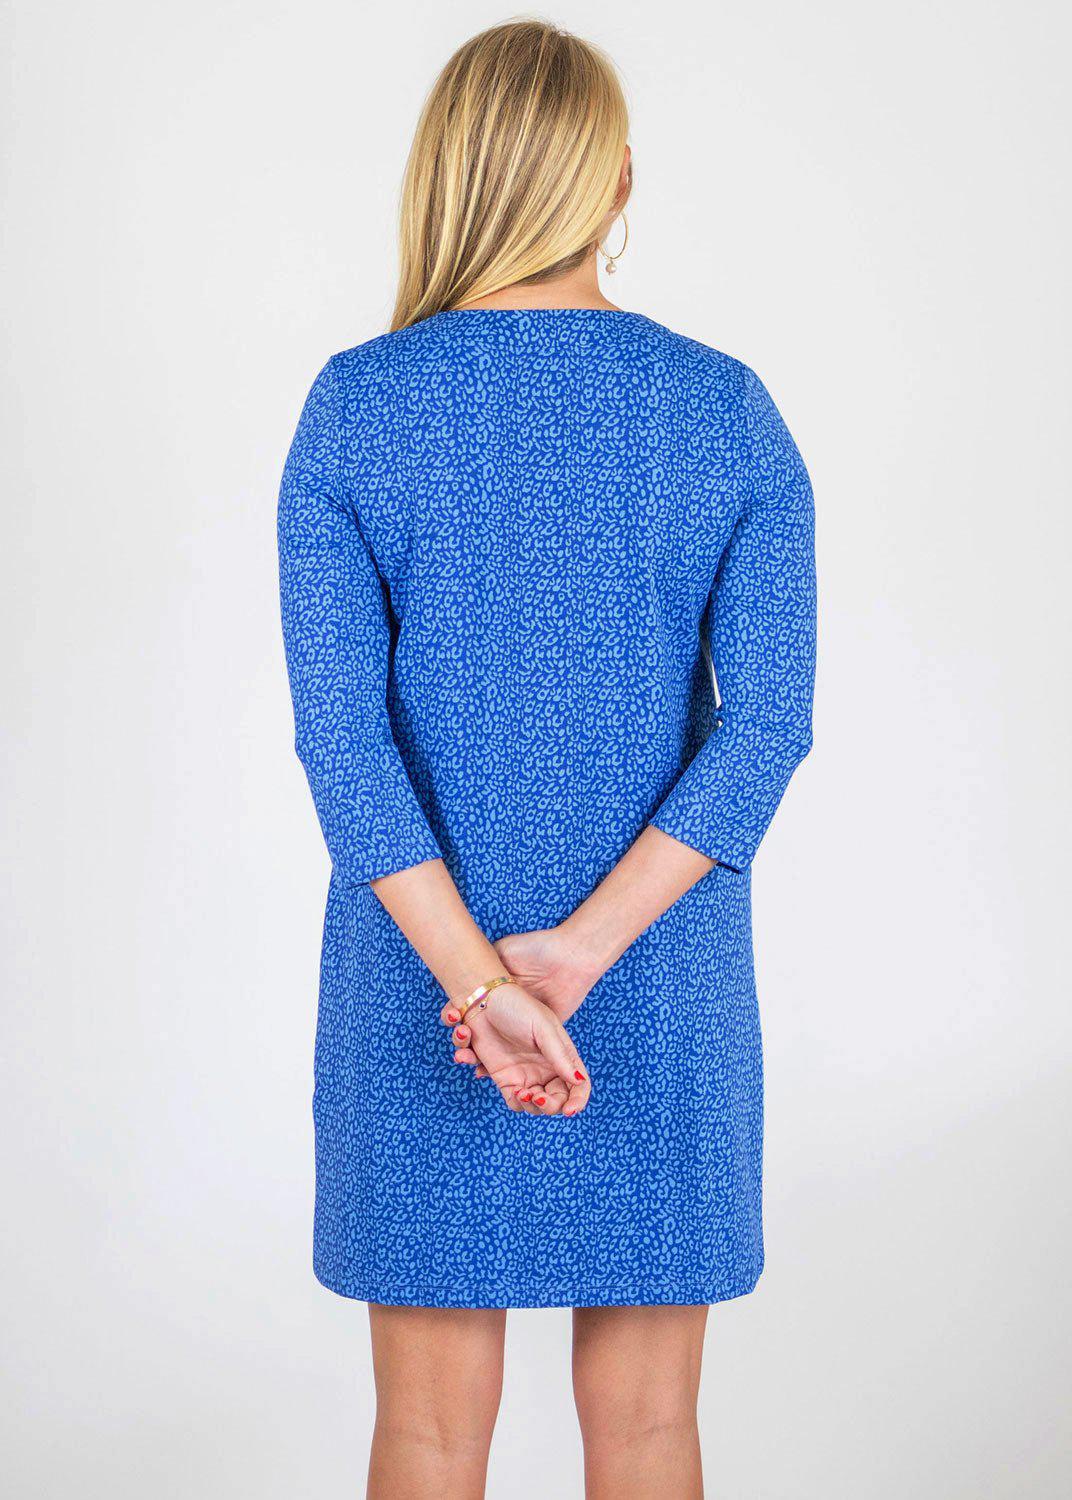 lucille-dress-3-4-sleeve-back-cheetah-blue-852389.jpg